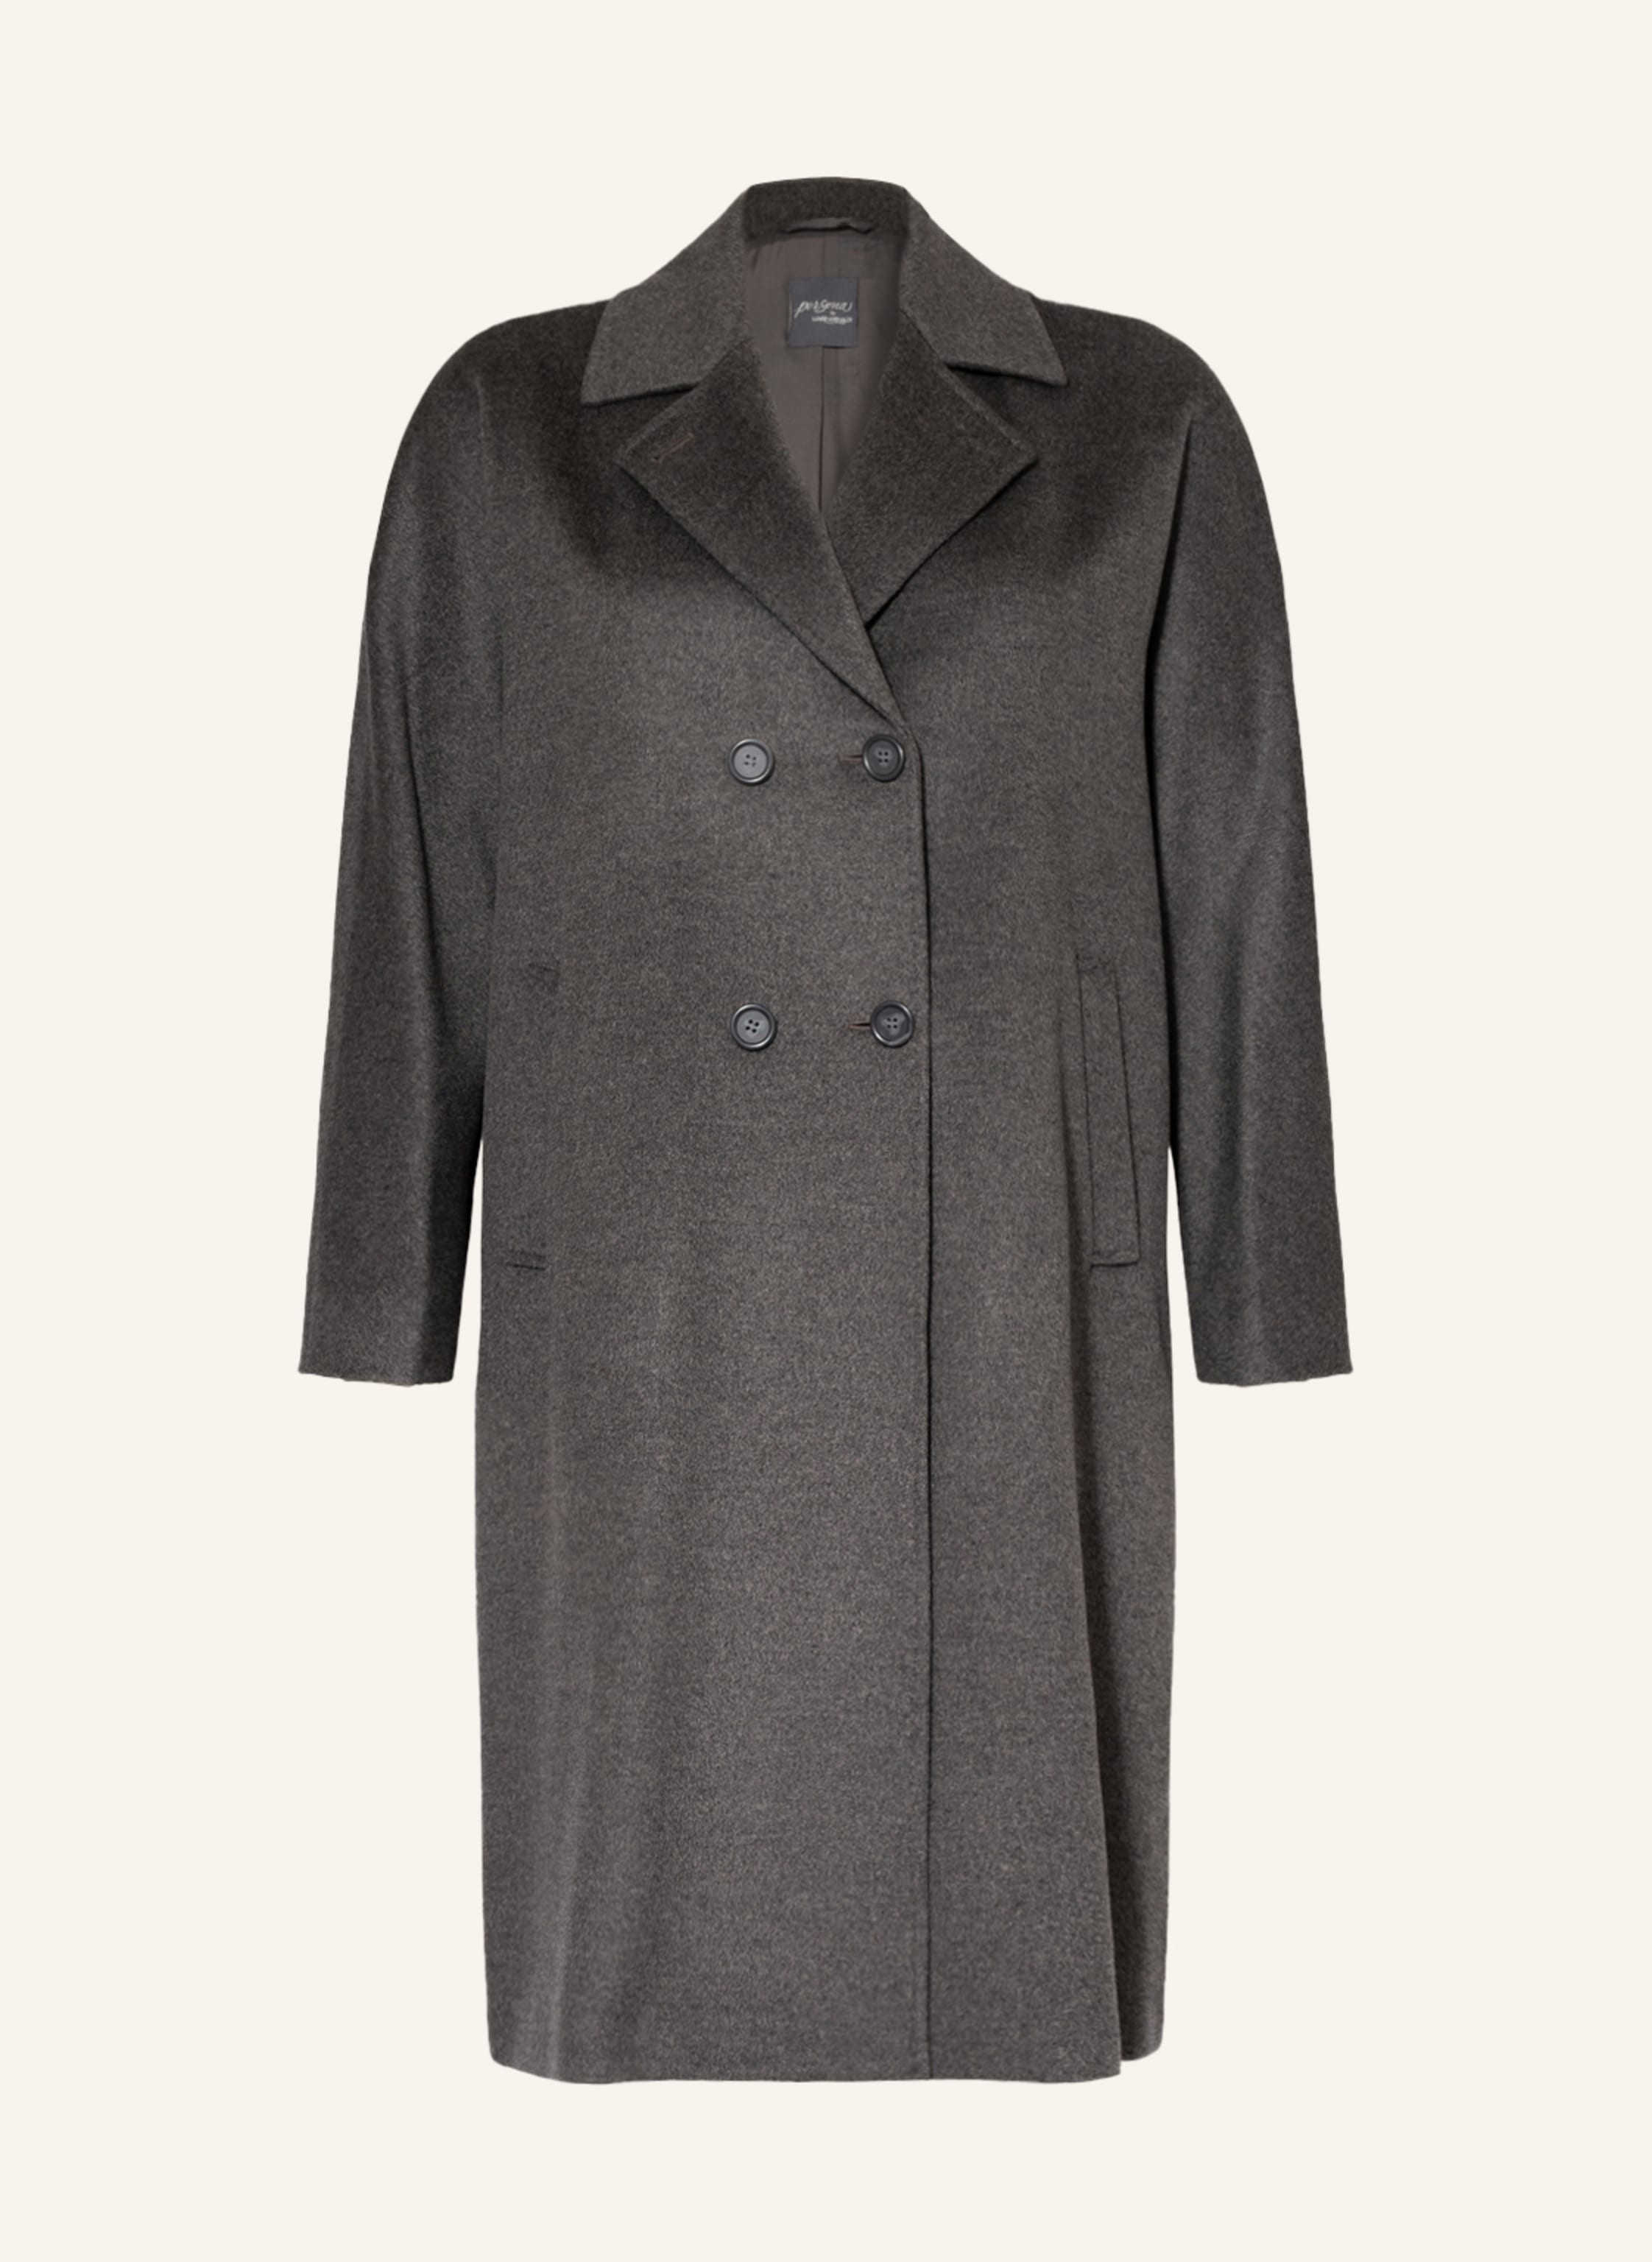 MARINA RINALDI PERSONA Wool coat in dark gray | Breuninger